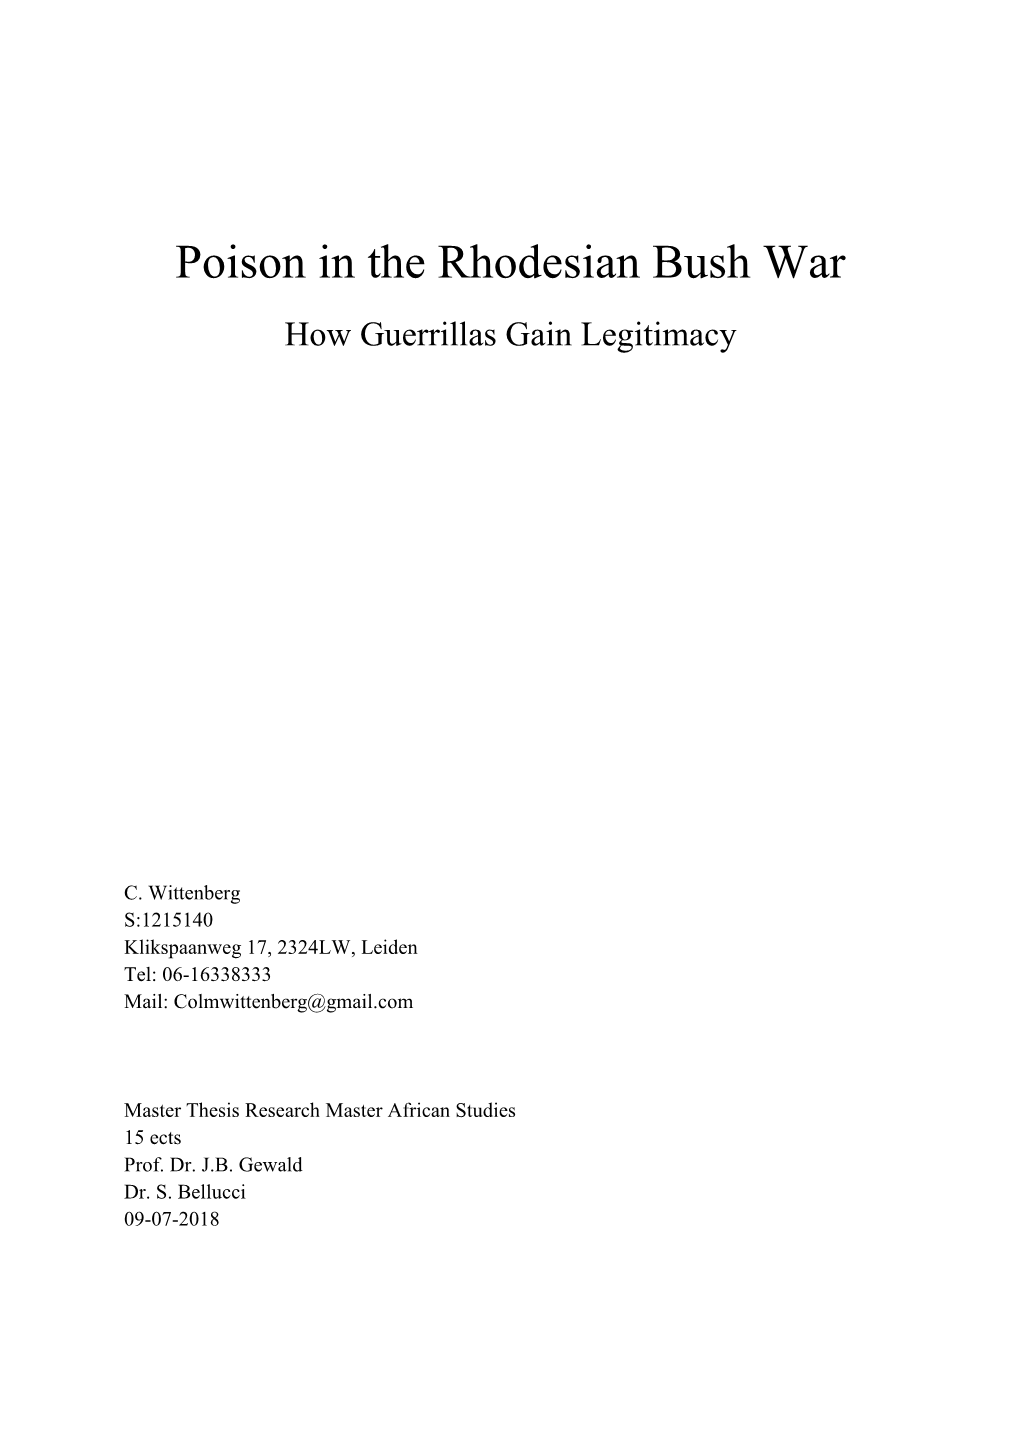 Poison in the Rhodesian Bush War How Guerrillas Gain Legitimacy